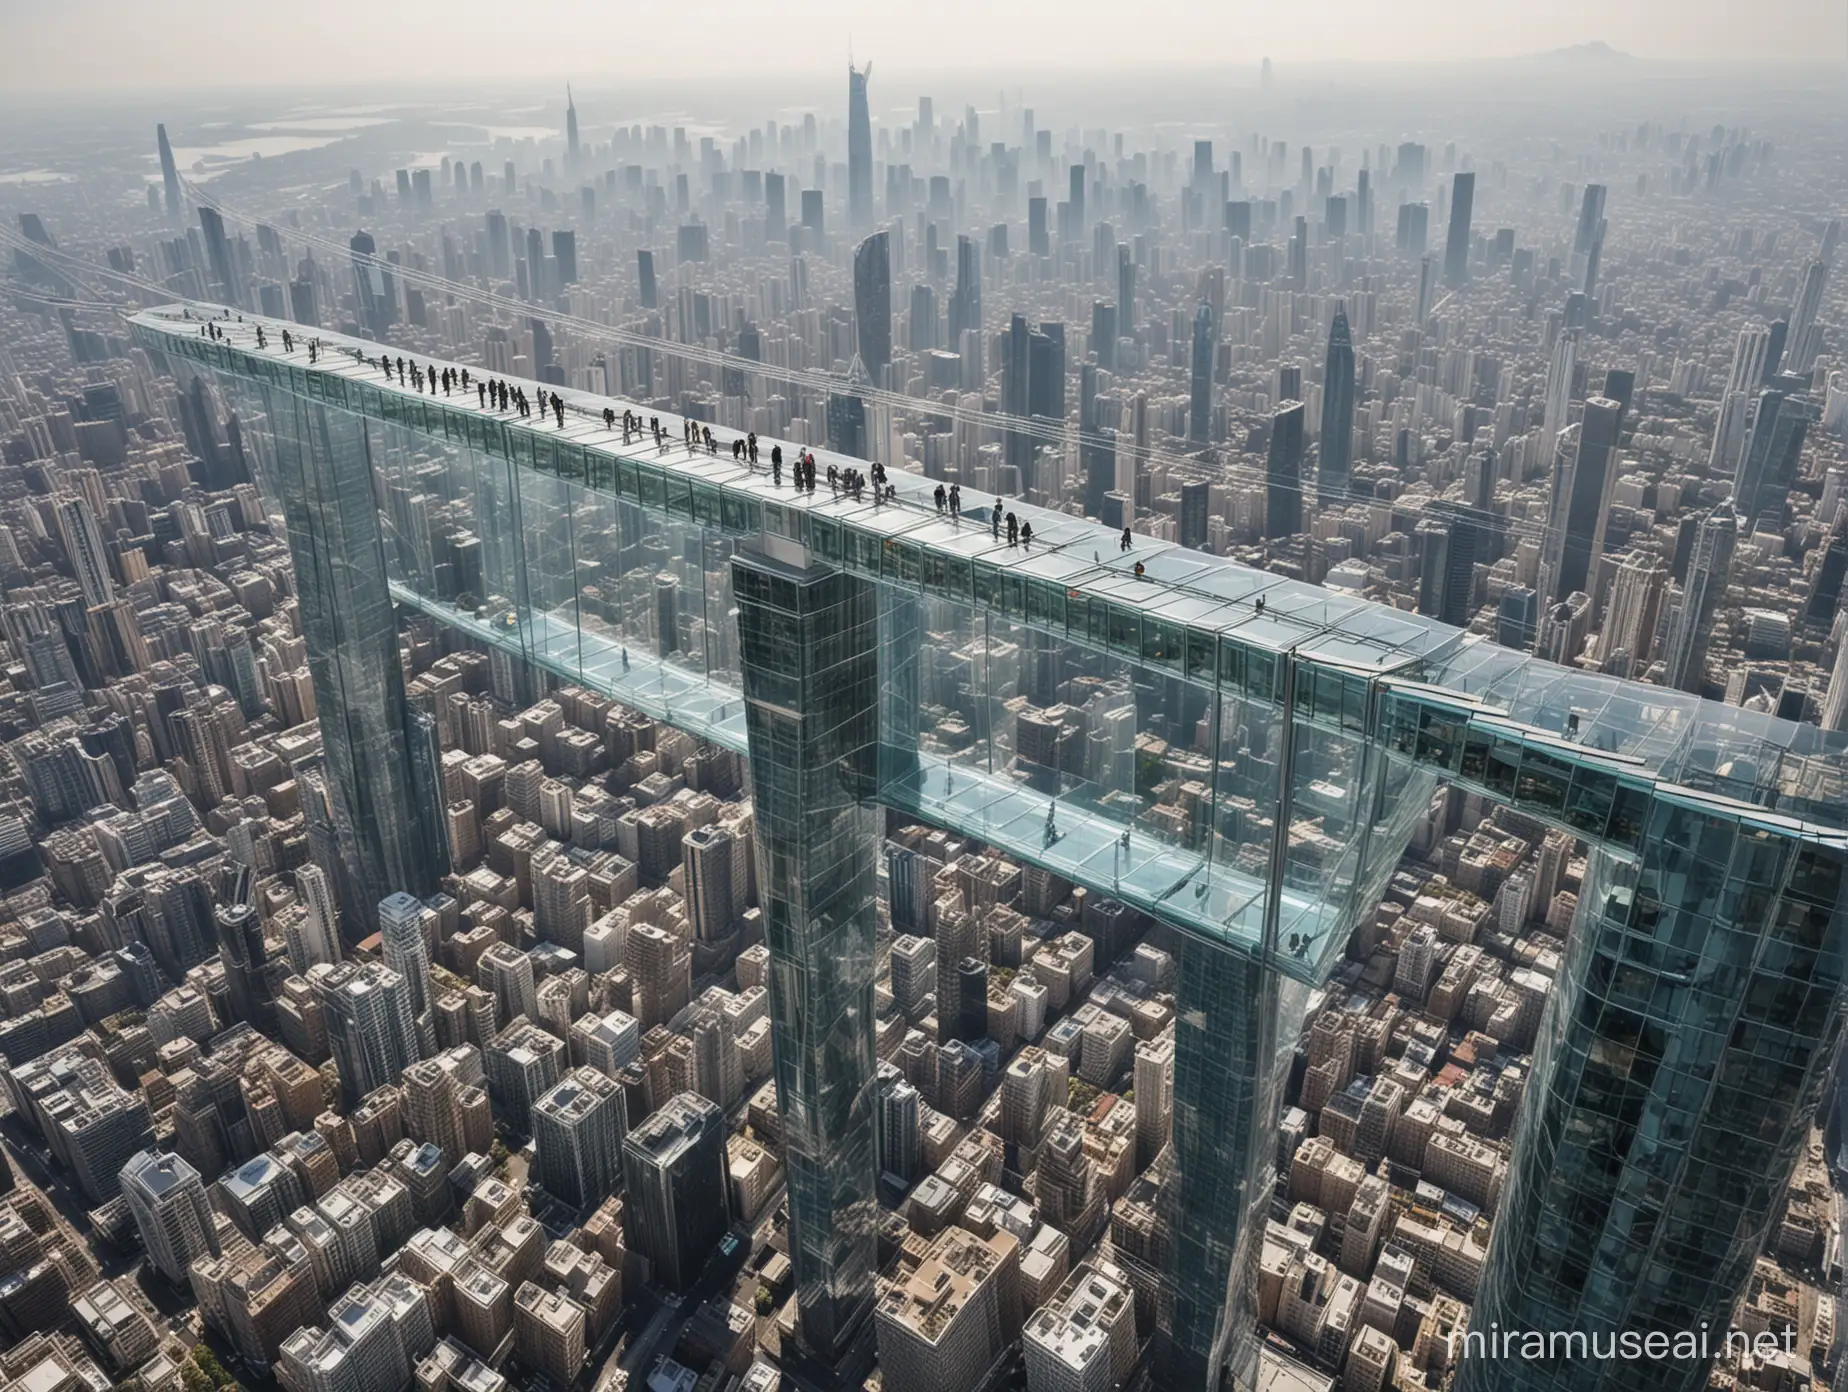 Futuristic Skybridge CapsuleShaped Glass Connection Between KilometerHigh Buildings